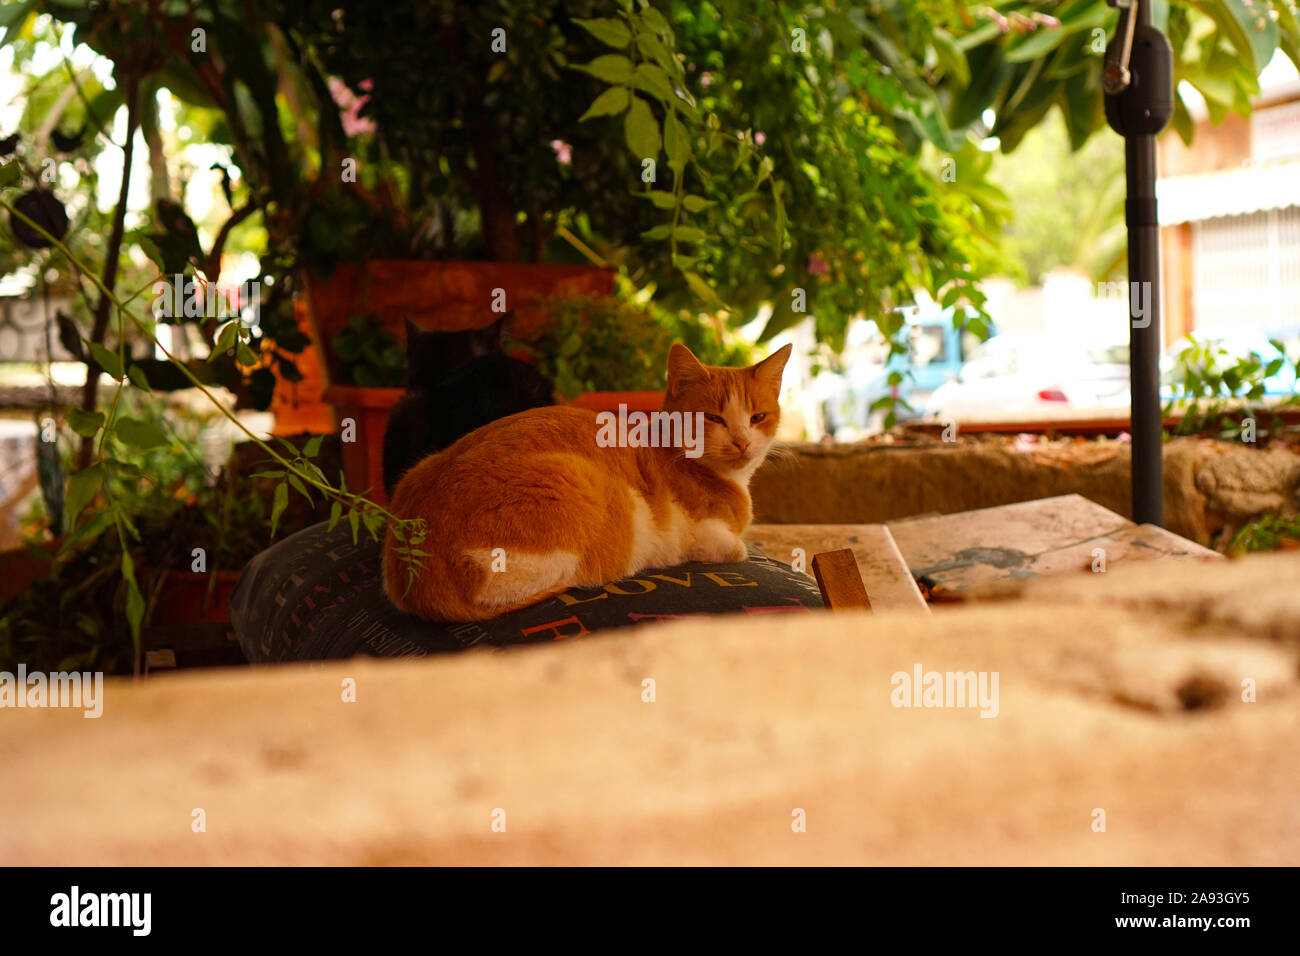 A ginger cat resting in an urban garden Stock Photo